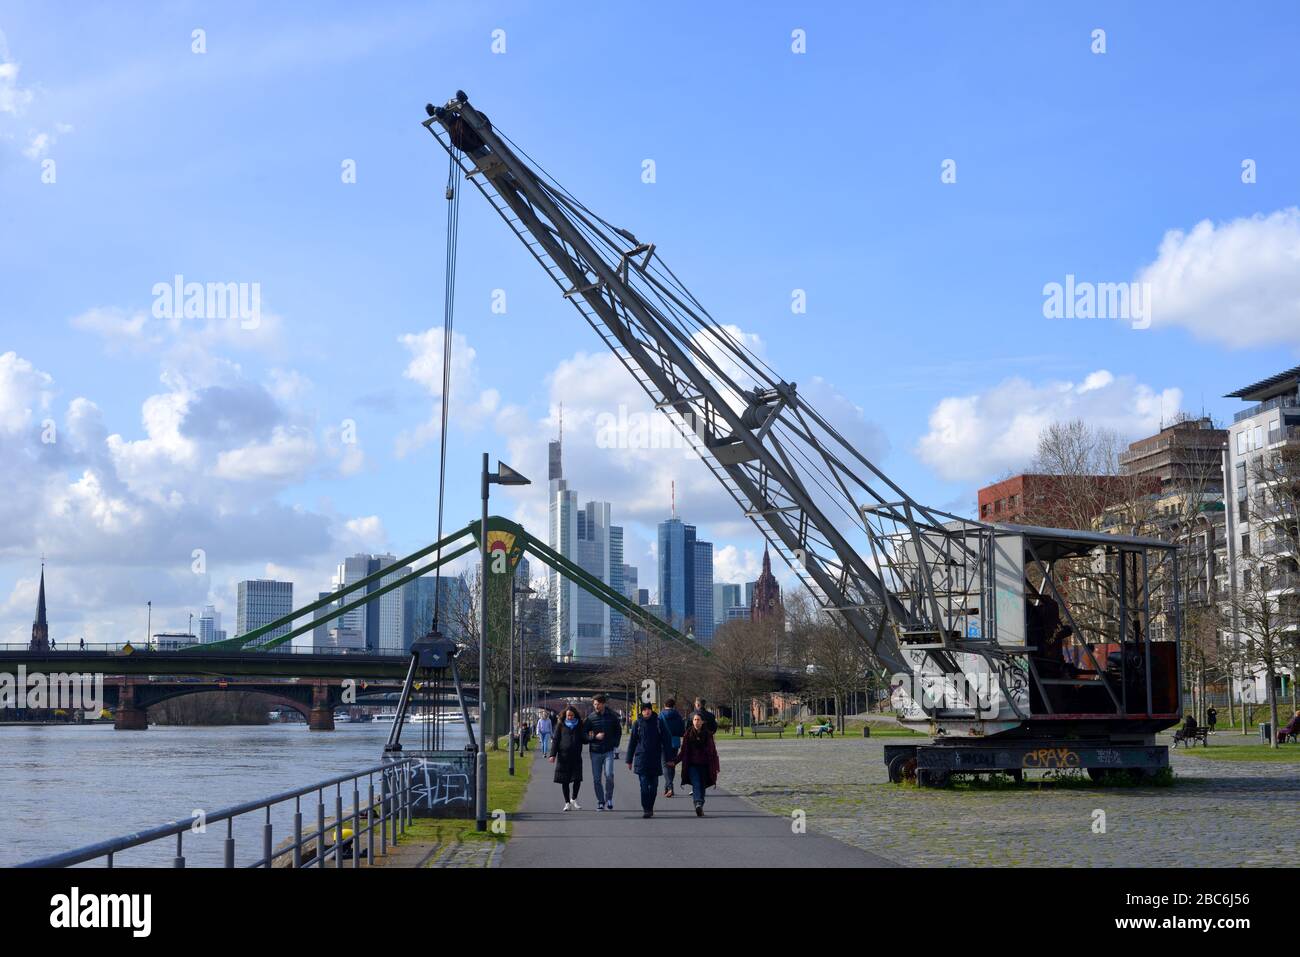 Frankfurt Main, Germany 03-14-2020 people walking on the river main nea the Weseler Werft passing an historic crane Stock Photo